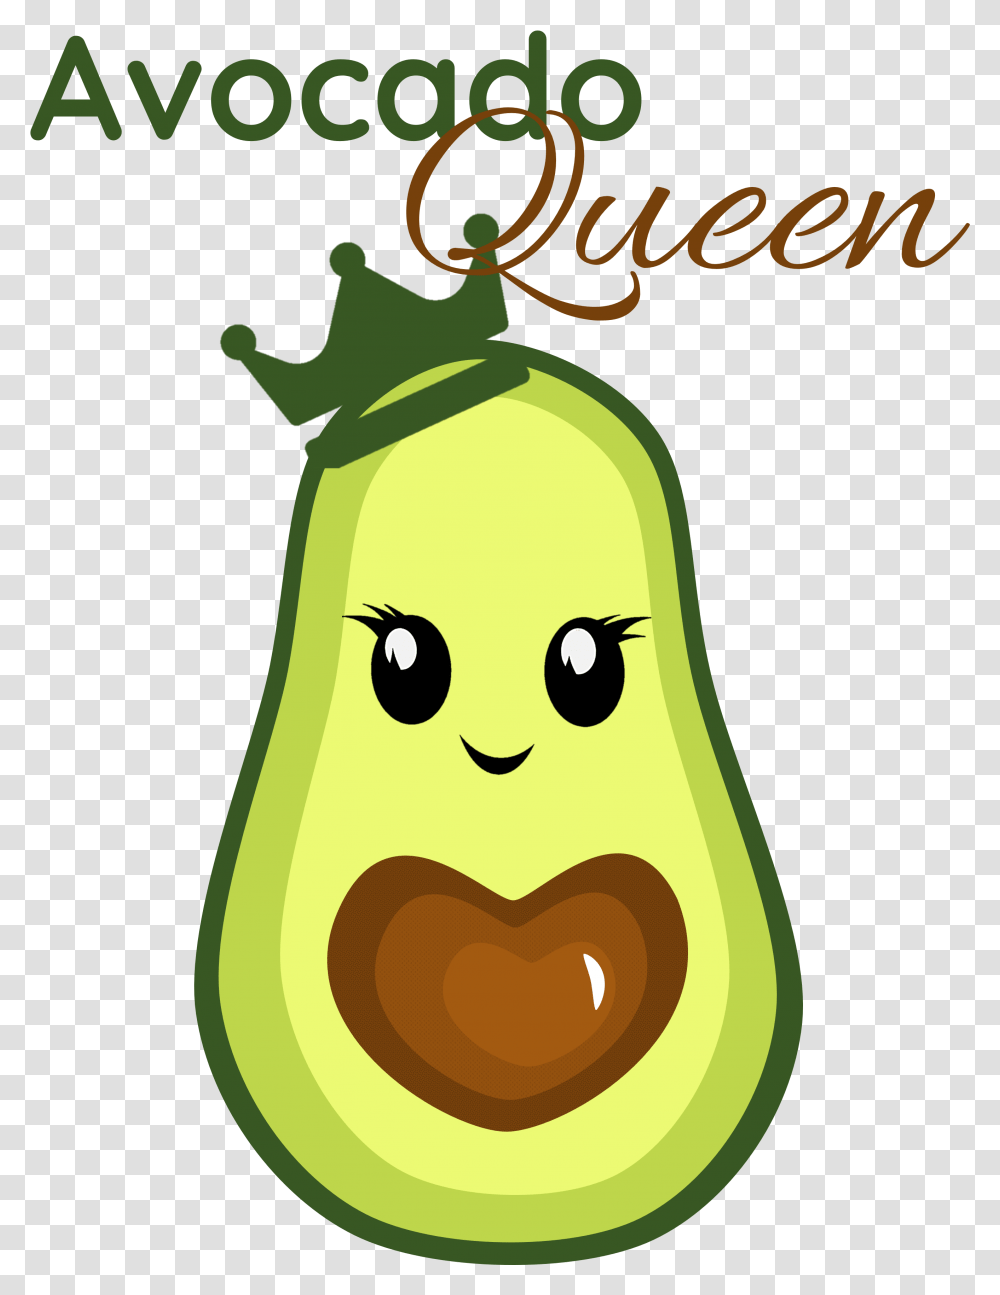 Avocado Queen With Heart Avocado Queen, Plant, Food, Fruit, Label Transparent Png